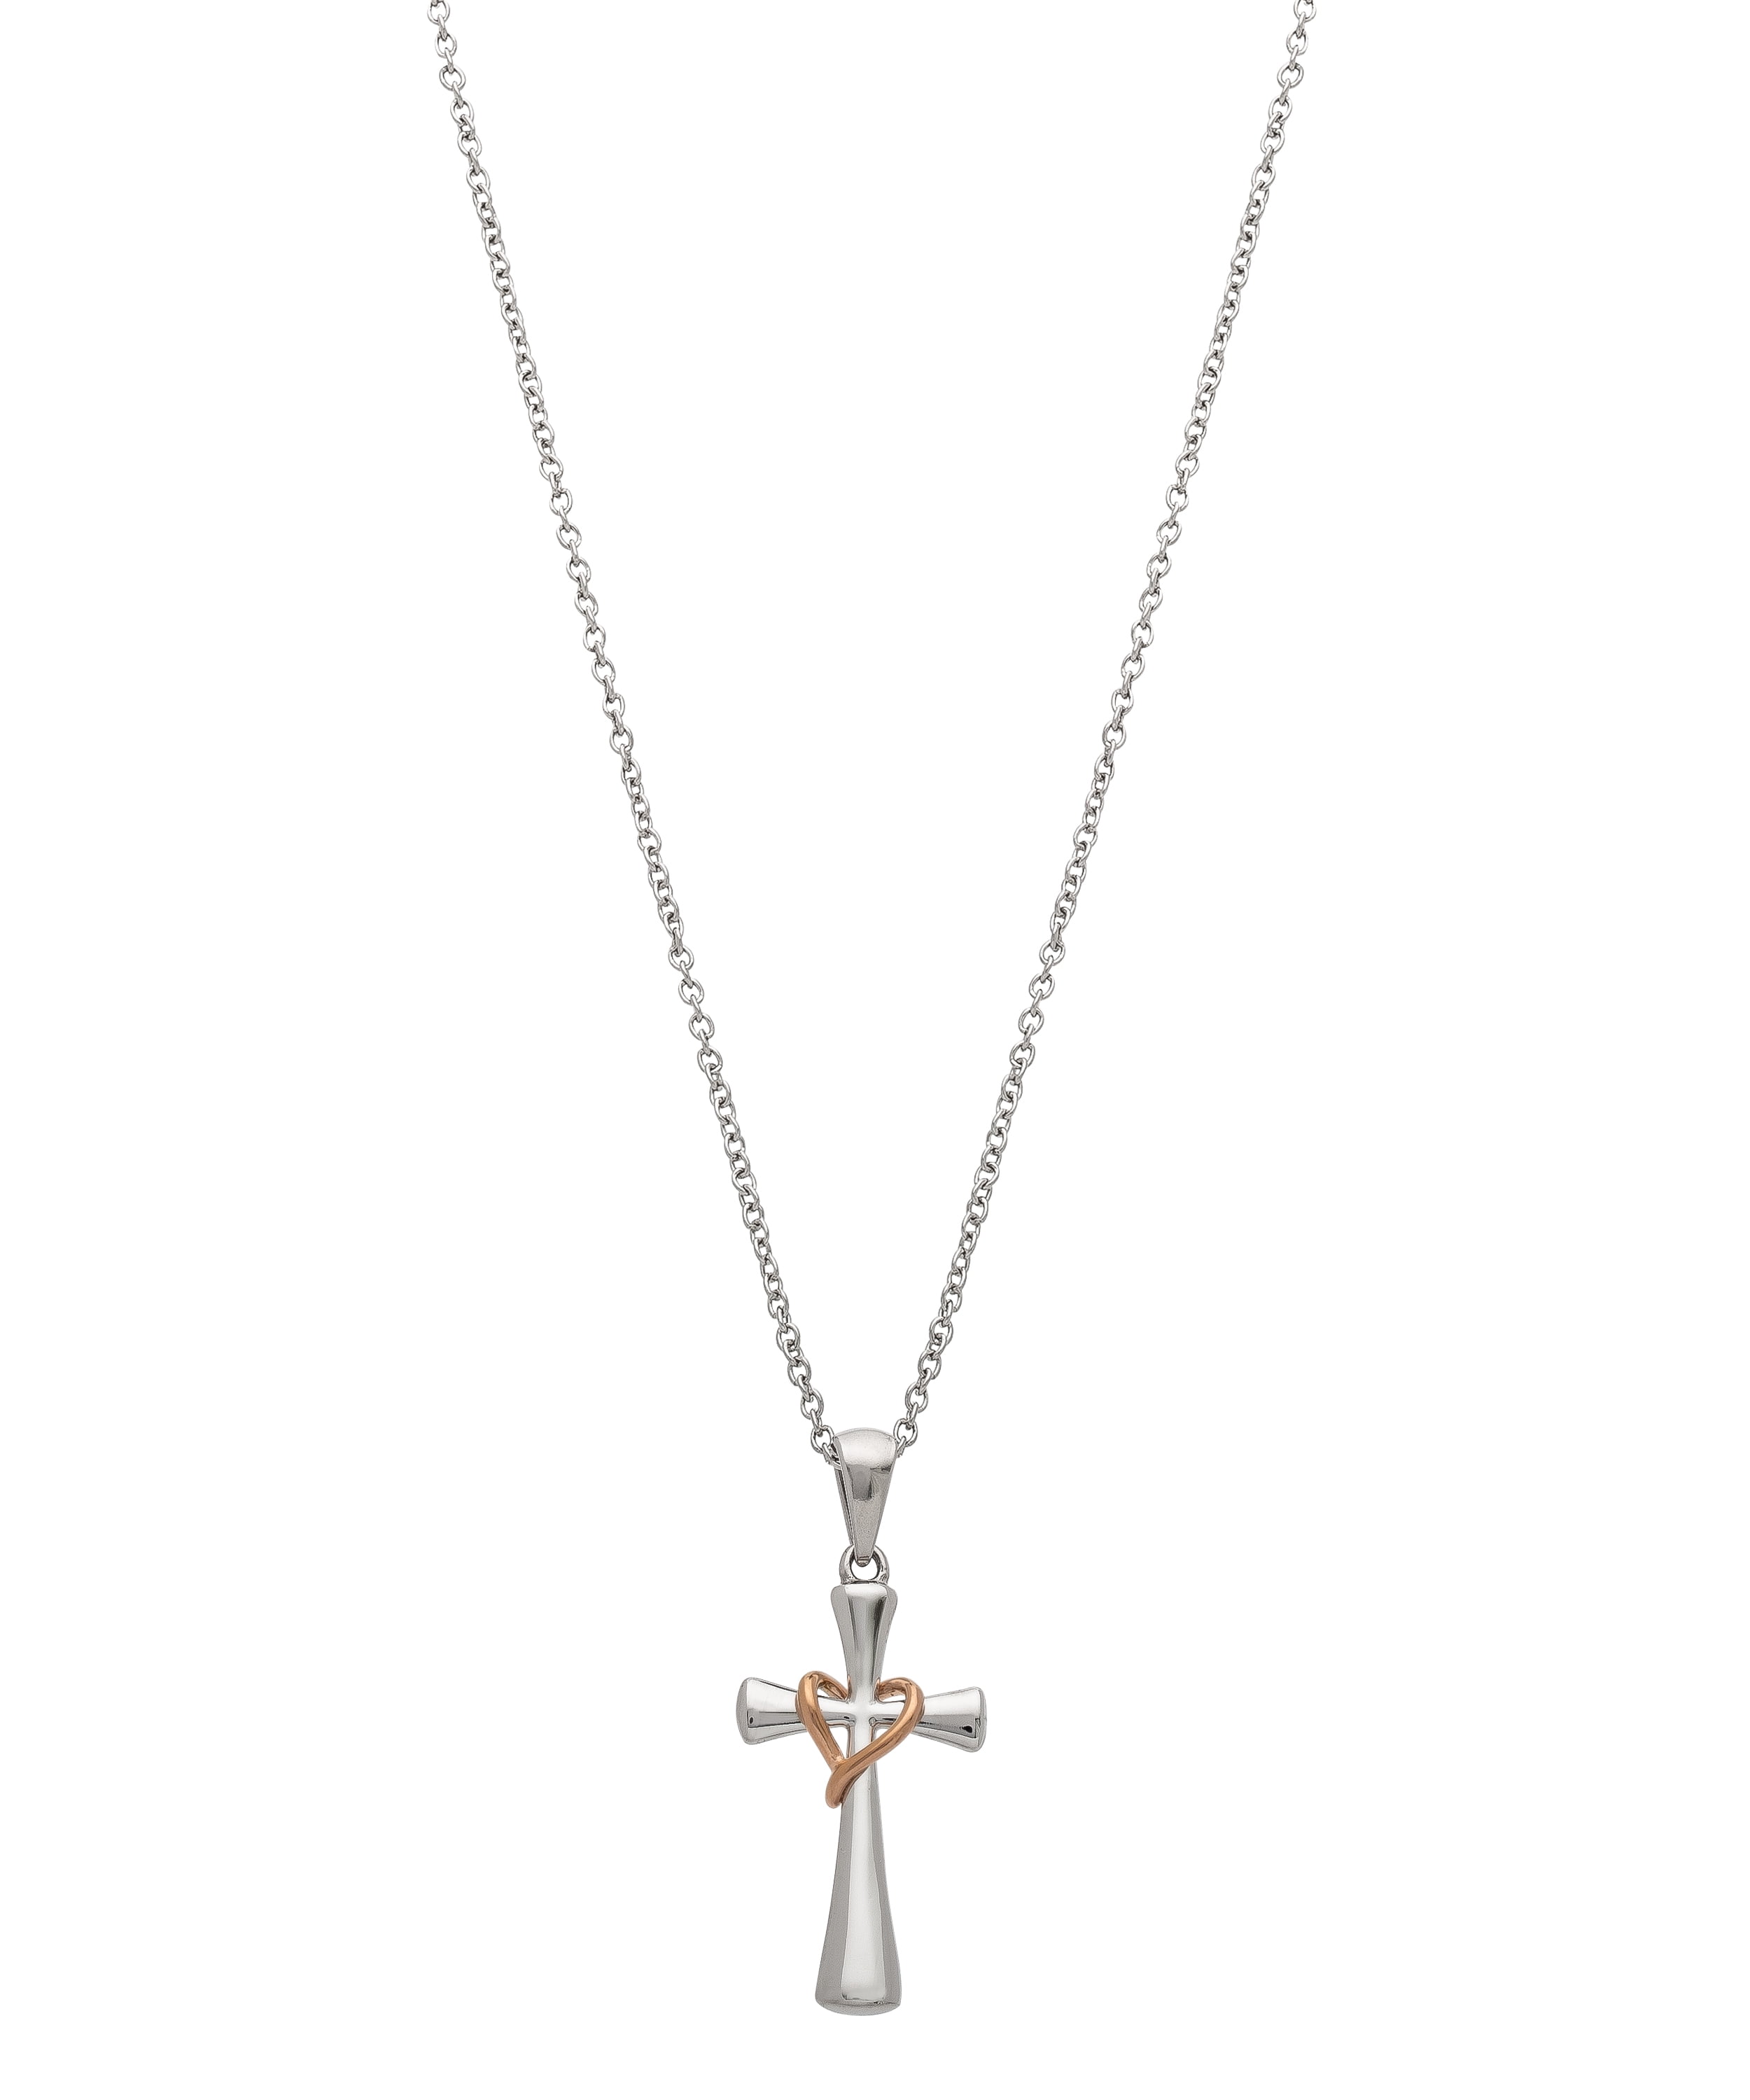 Purple Cross Necklace Stone Bead Gold Chain Fashion Jewelry NEW 